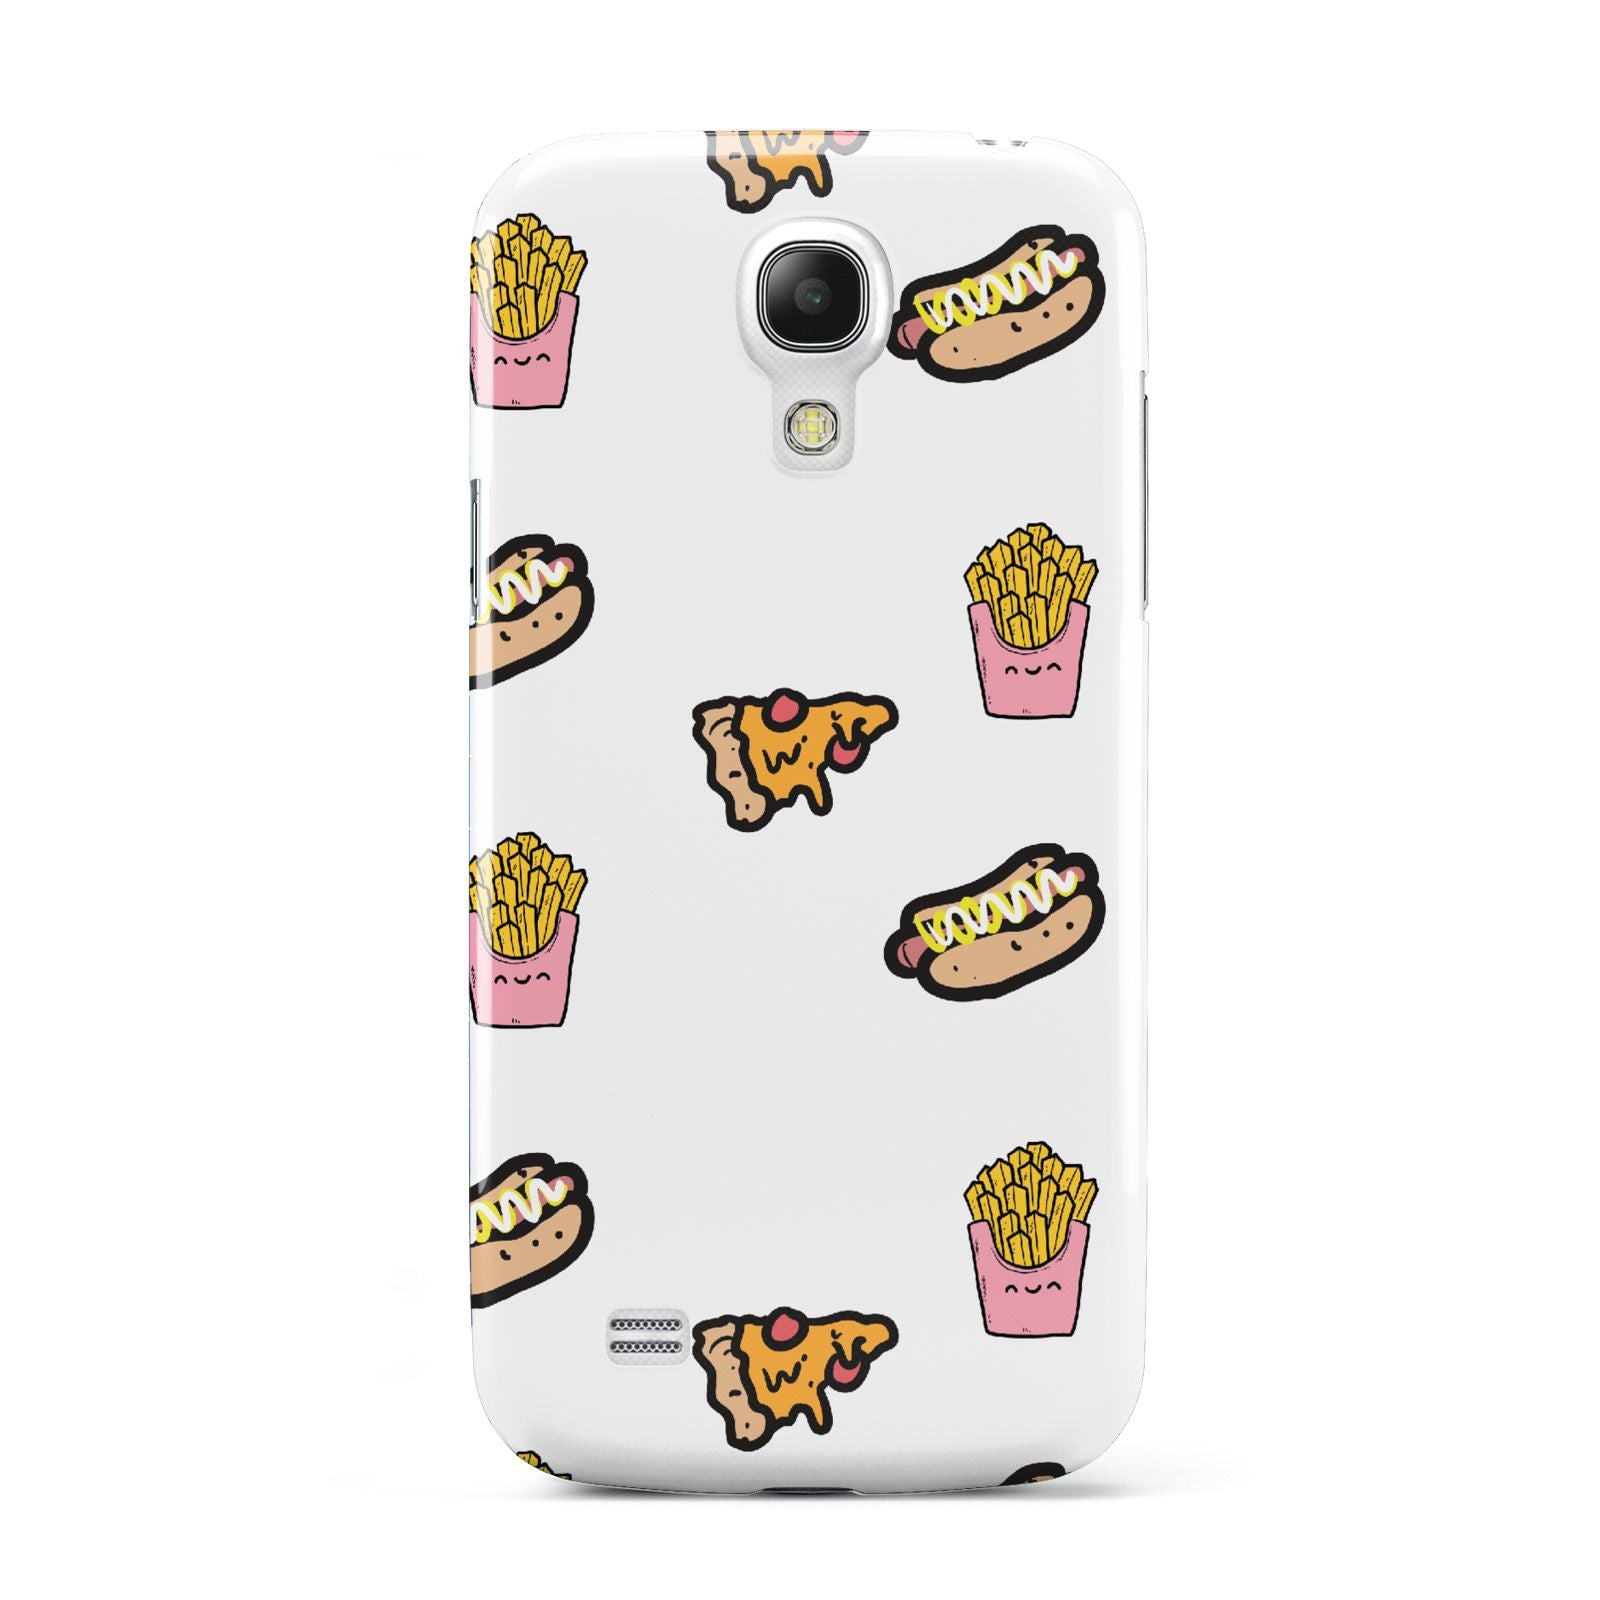 Fries Pizza Hot Dog Samsung Galaxy S4 Mini Case